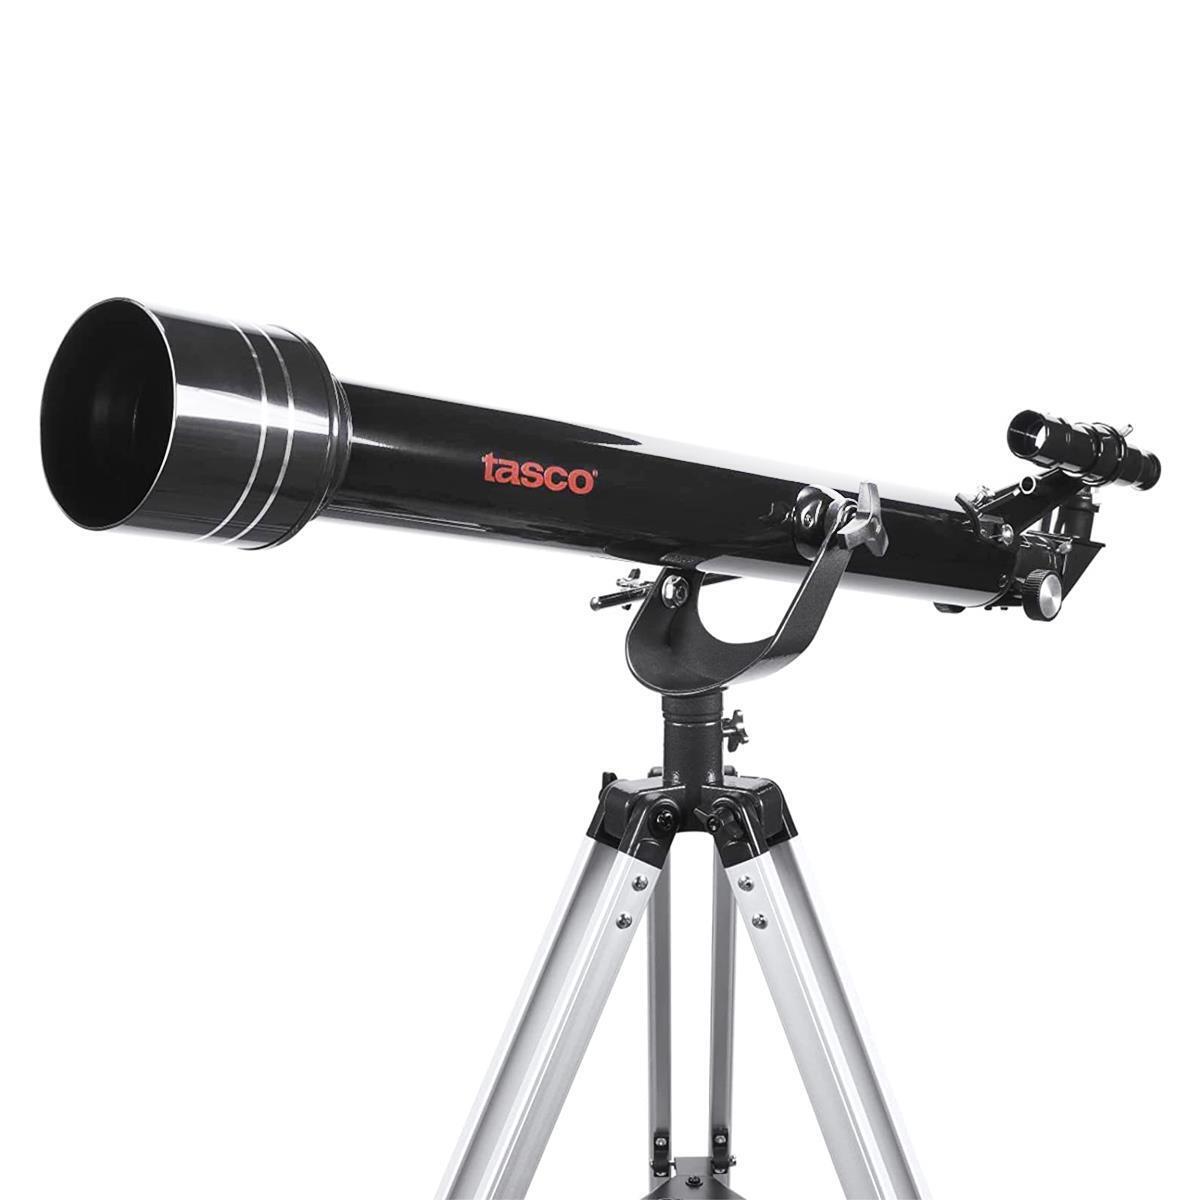 Tasco Novice 60x800mm f/13 AZ Refractor Telescope with Adjustable Tripod, Black